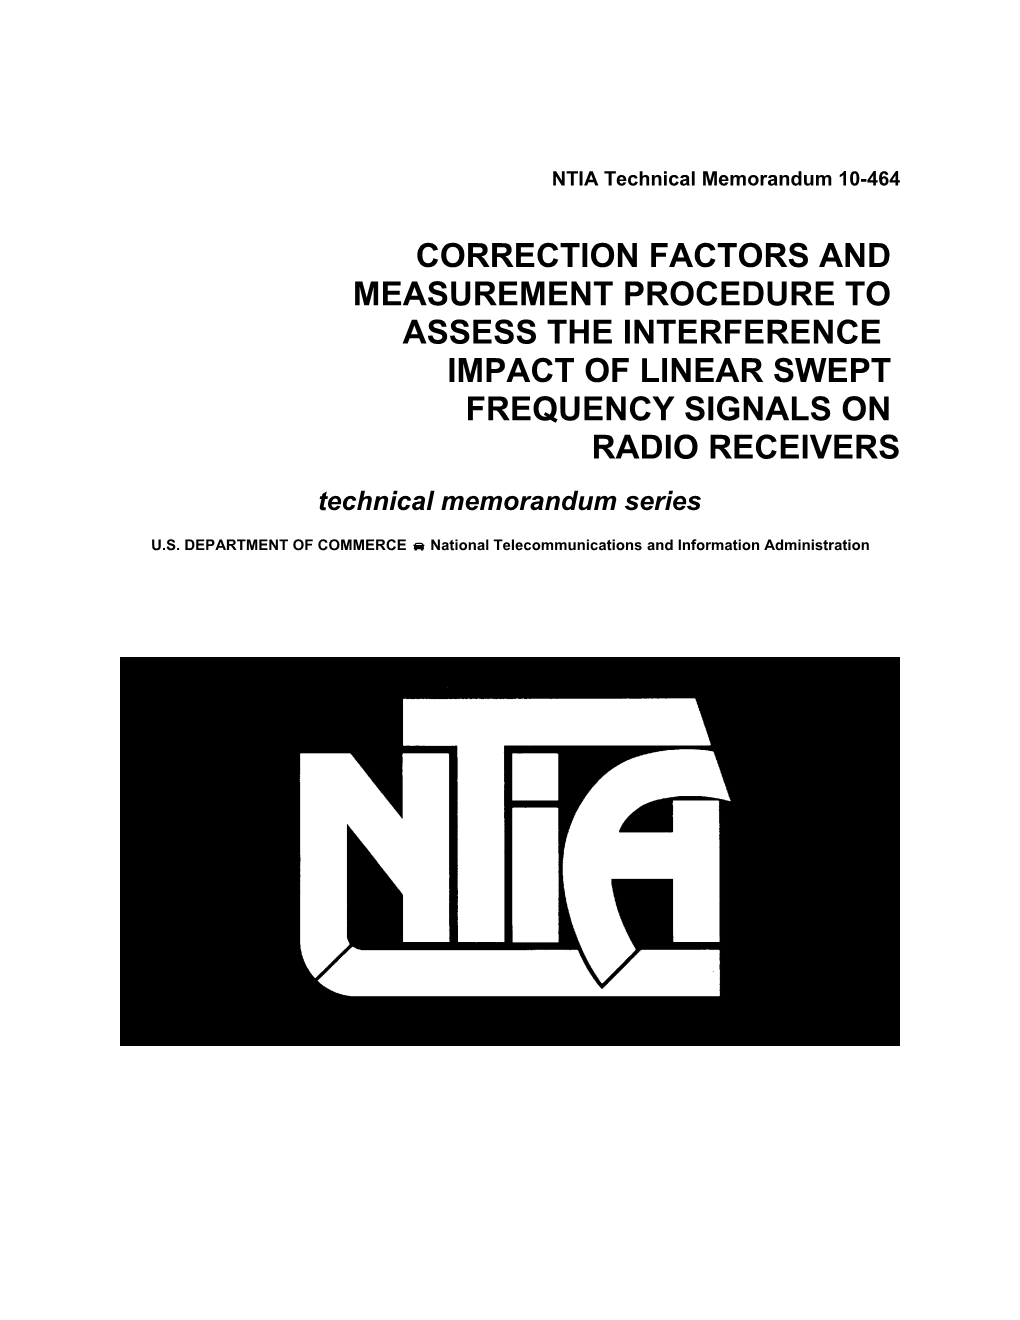 NTIA Report 03-XXX